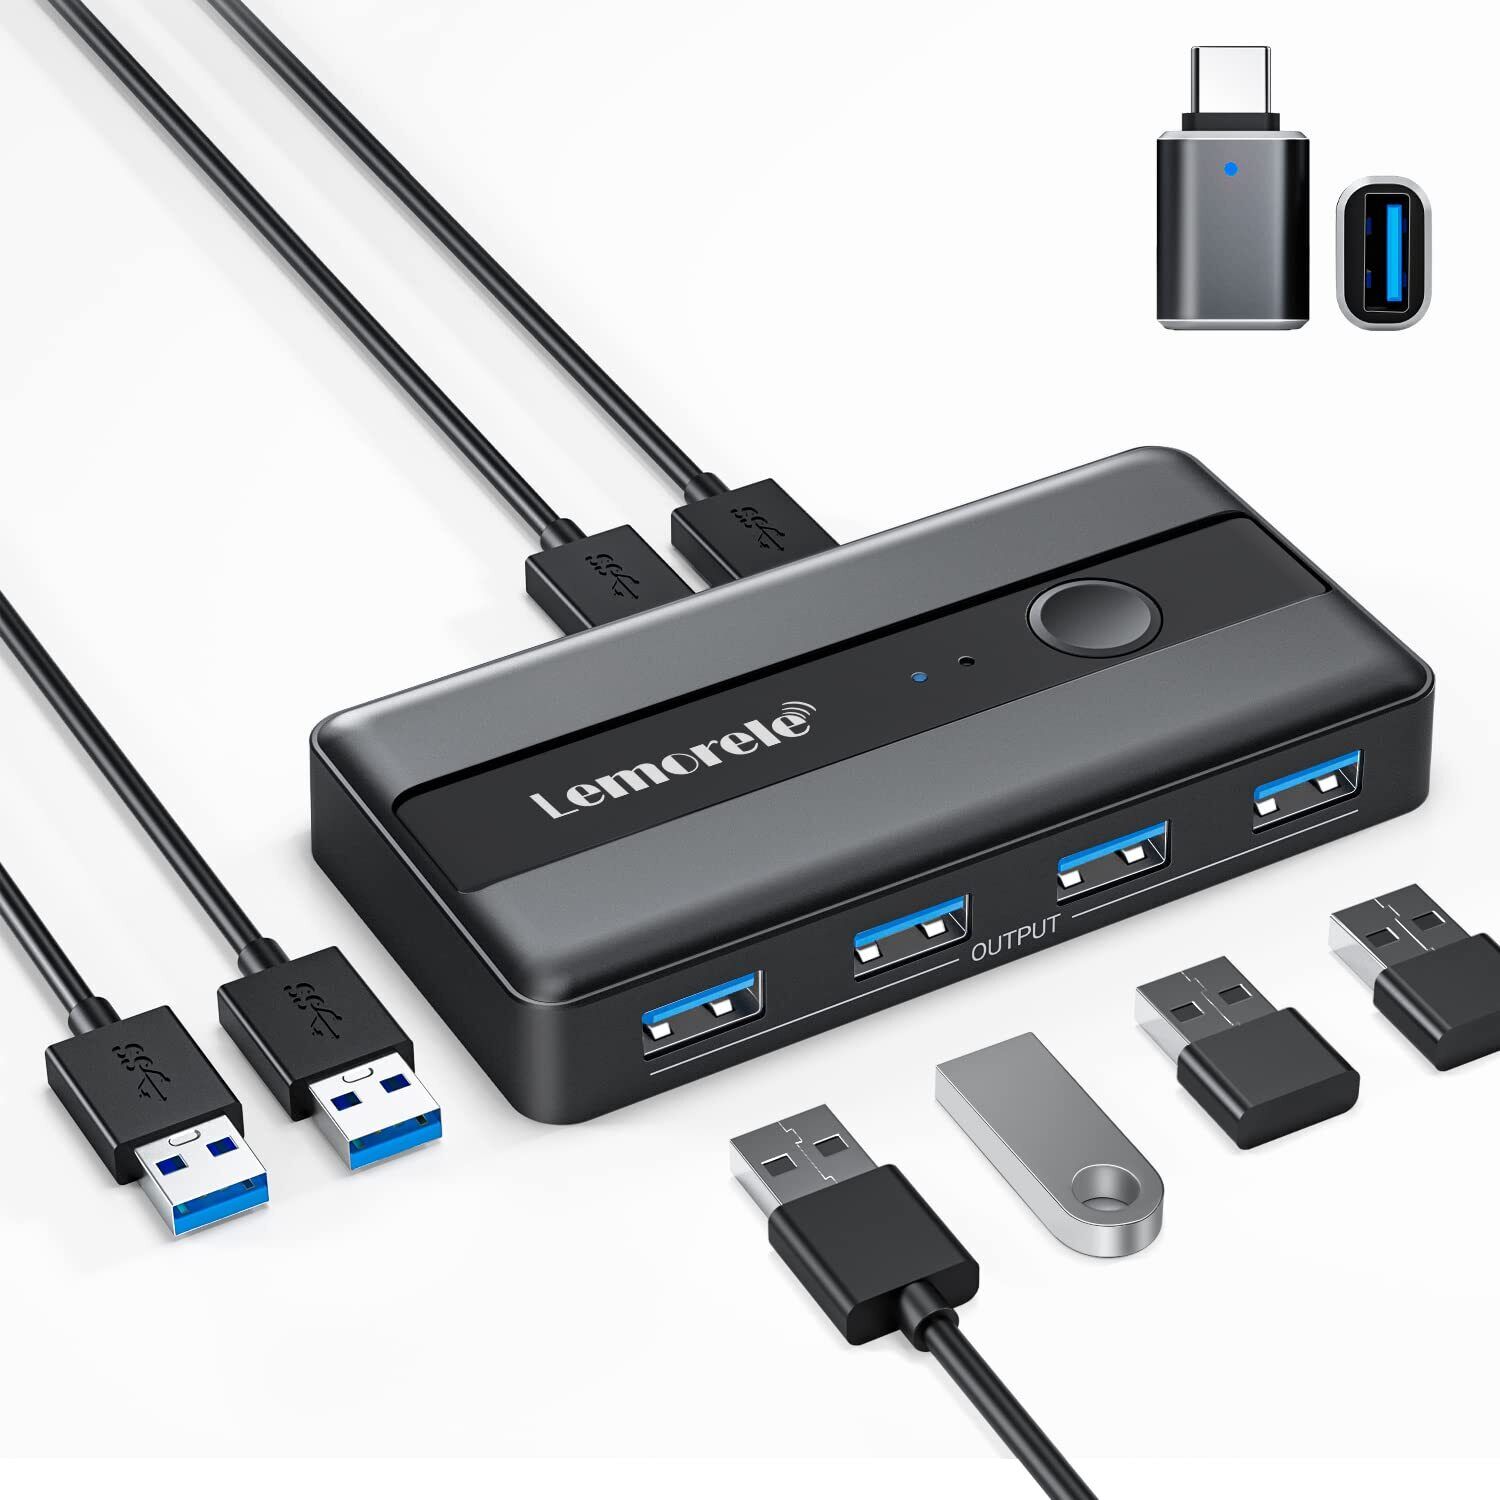 Lemorele USB 3.0 Switch Selector 2 Computers Sharing 4 USB Devices 4-Port USB Pe